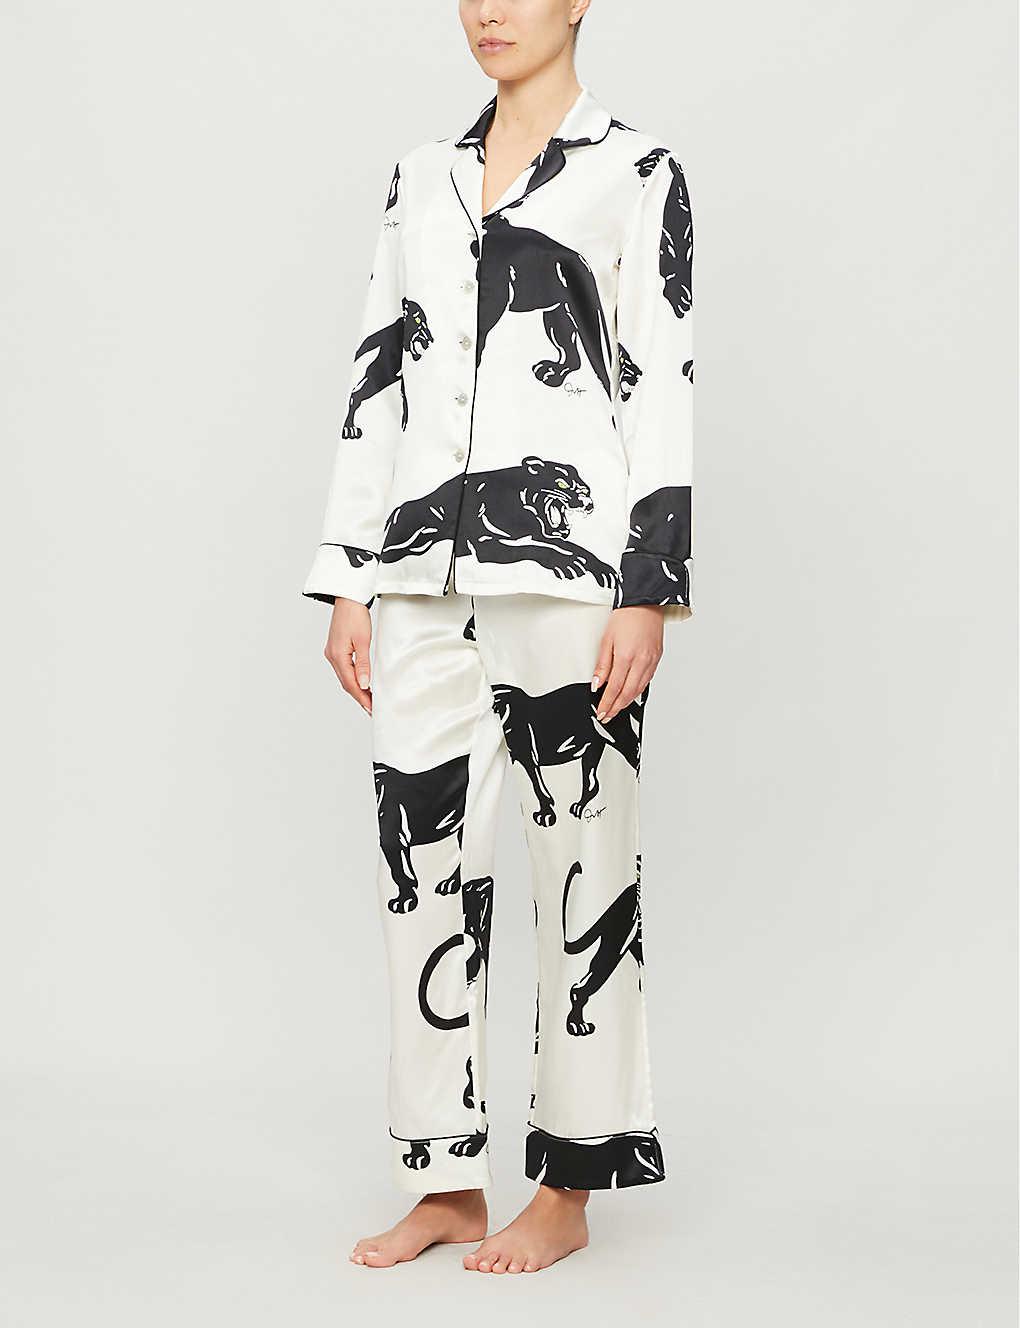 Louis Vuitton SS16 Black Panther Silk Pajama Shirt